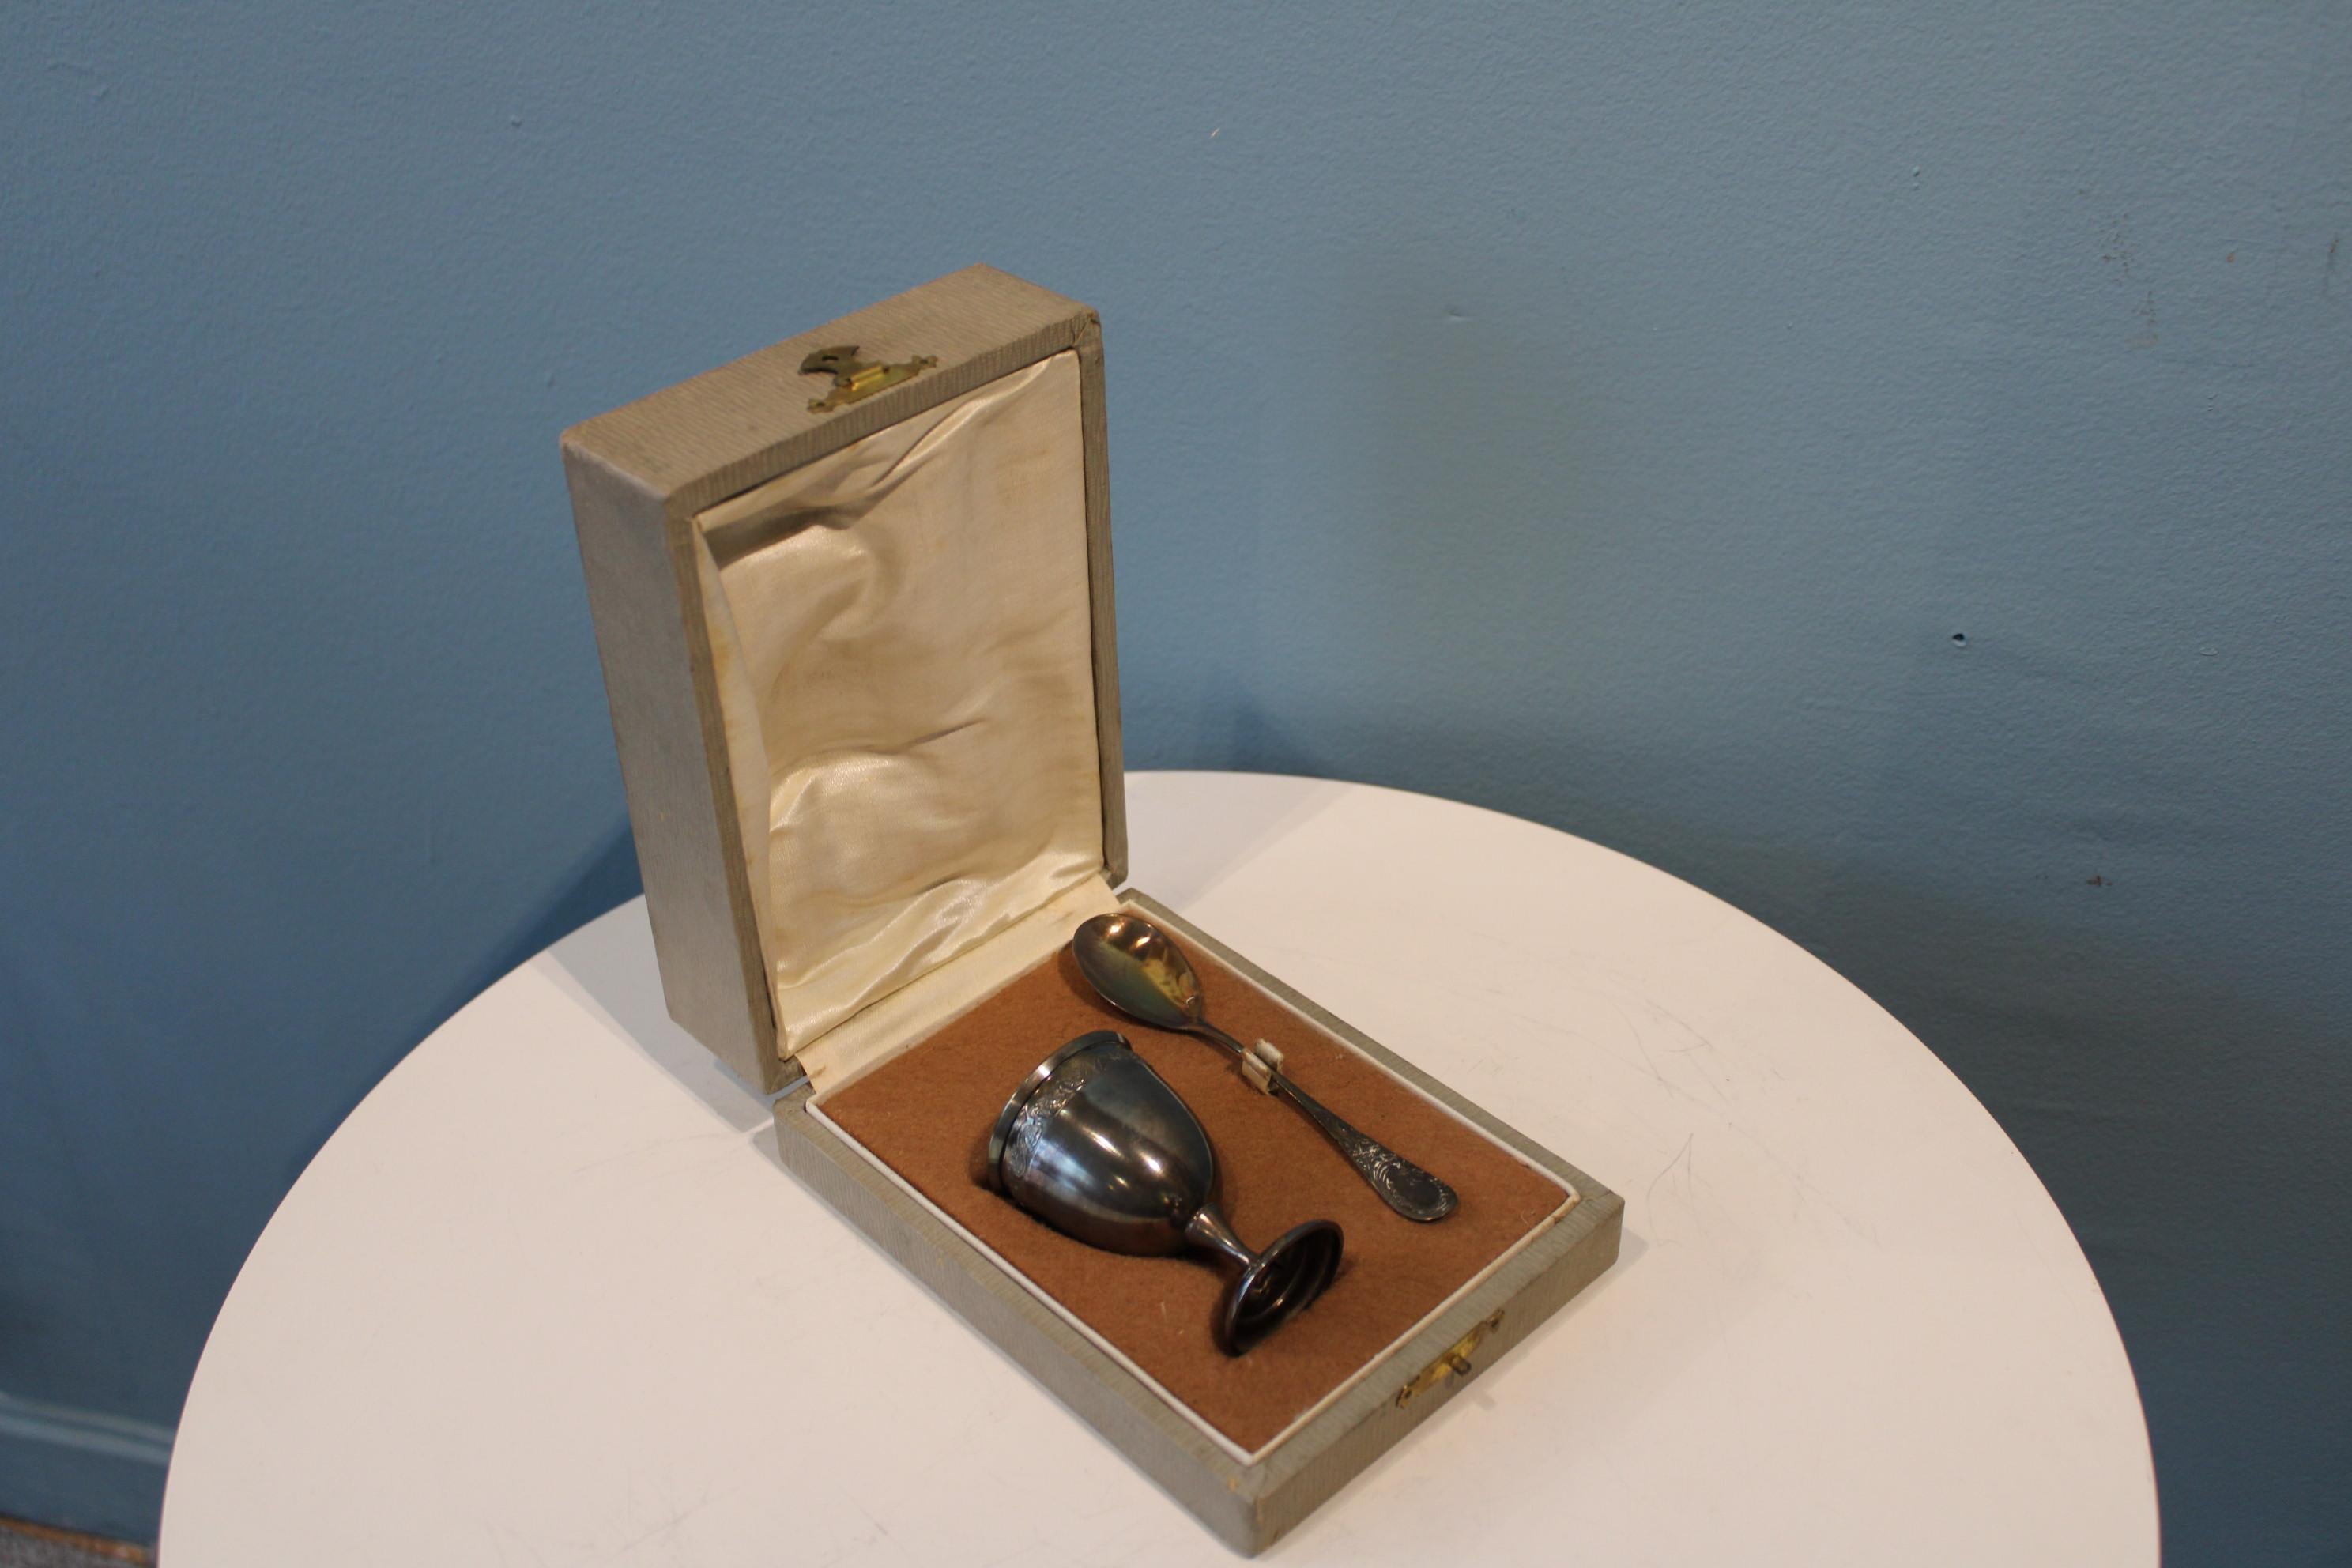 Silver metal, 19th century.

Egg mug dimensions : H 6.5 x diam 4 cm
Spoon dimensions : H 11.5 cm
Box dimensions: 11 x 15 x 6 cm